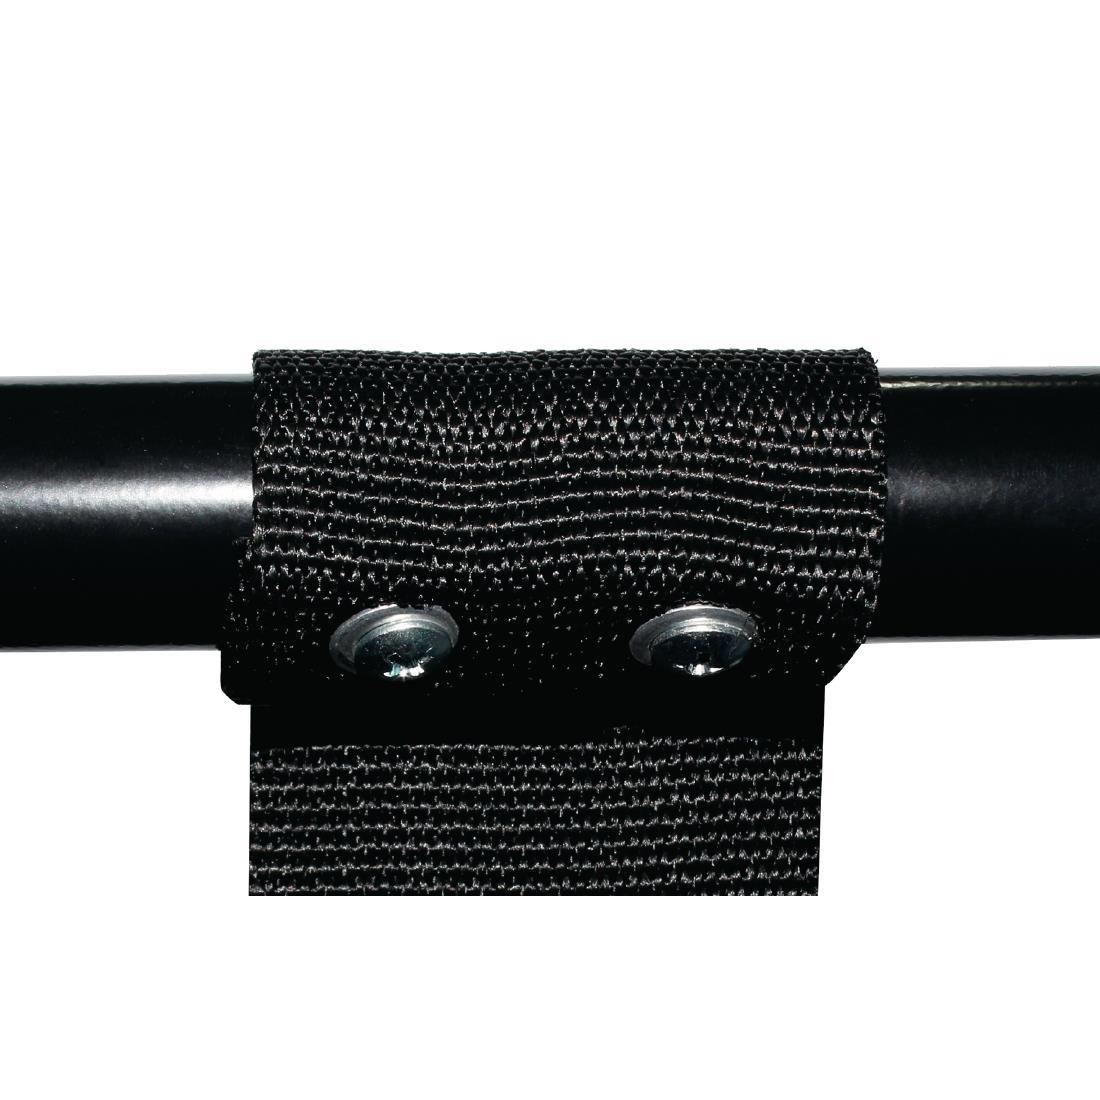 Bolero Black Luggage Rack - GR397  - 5